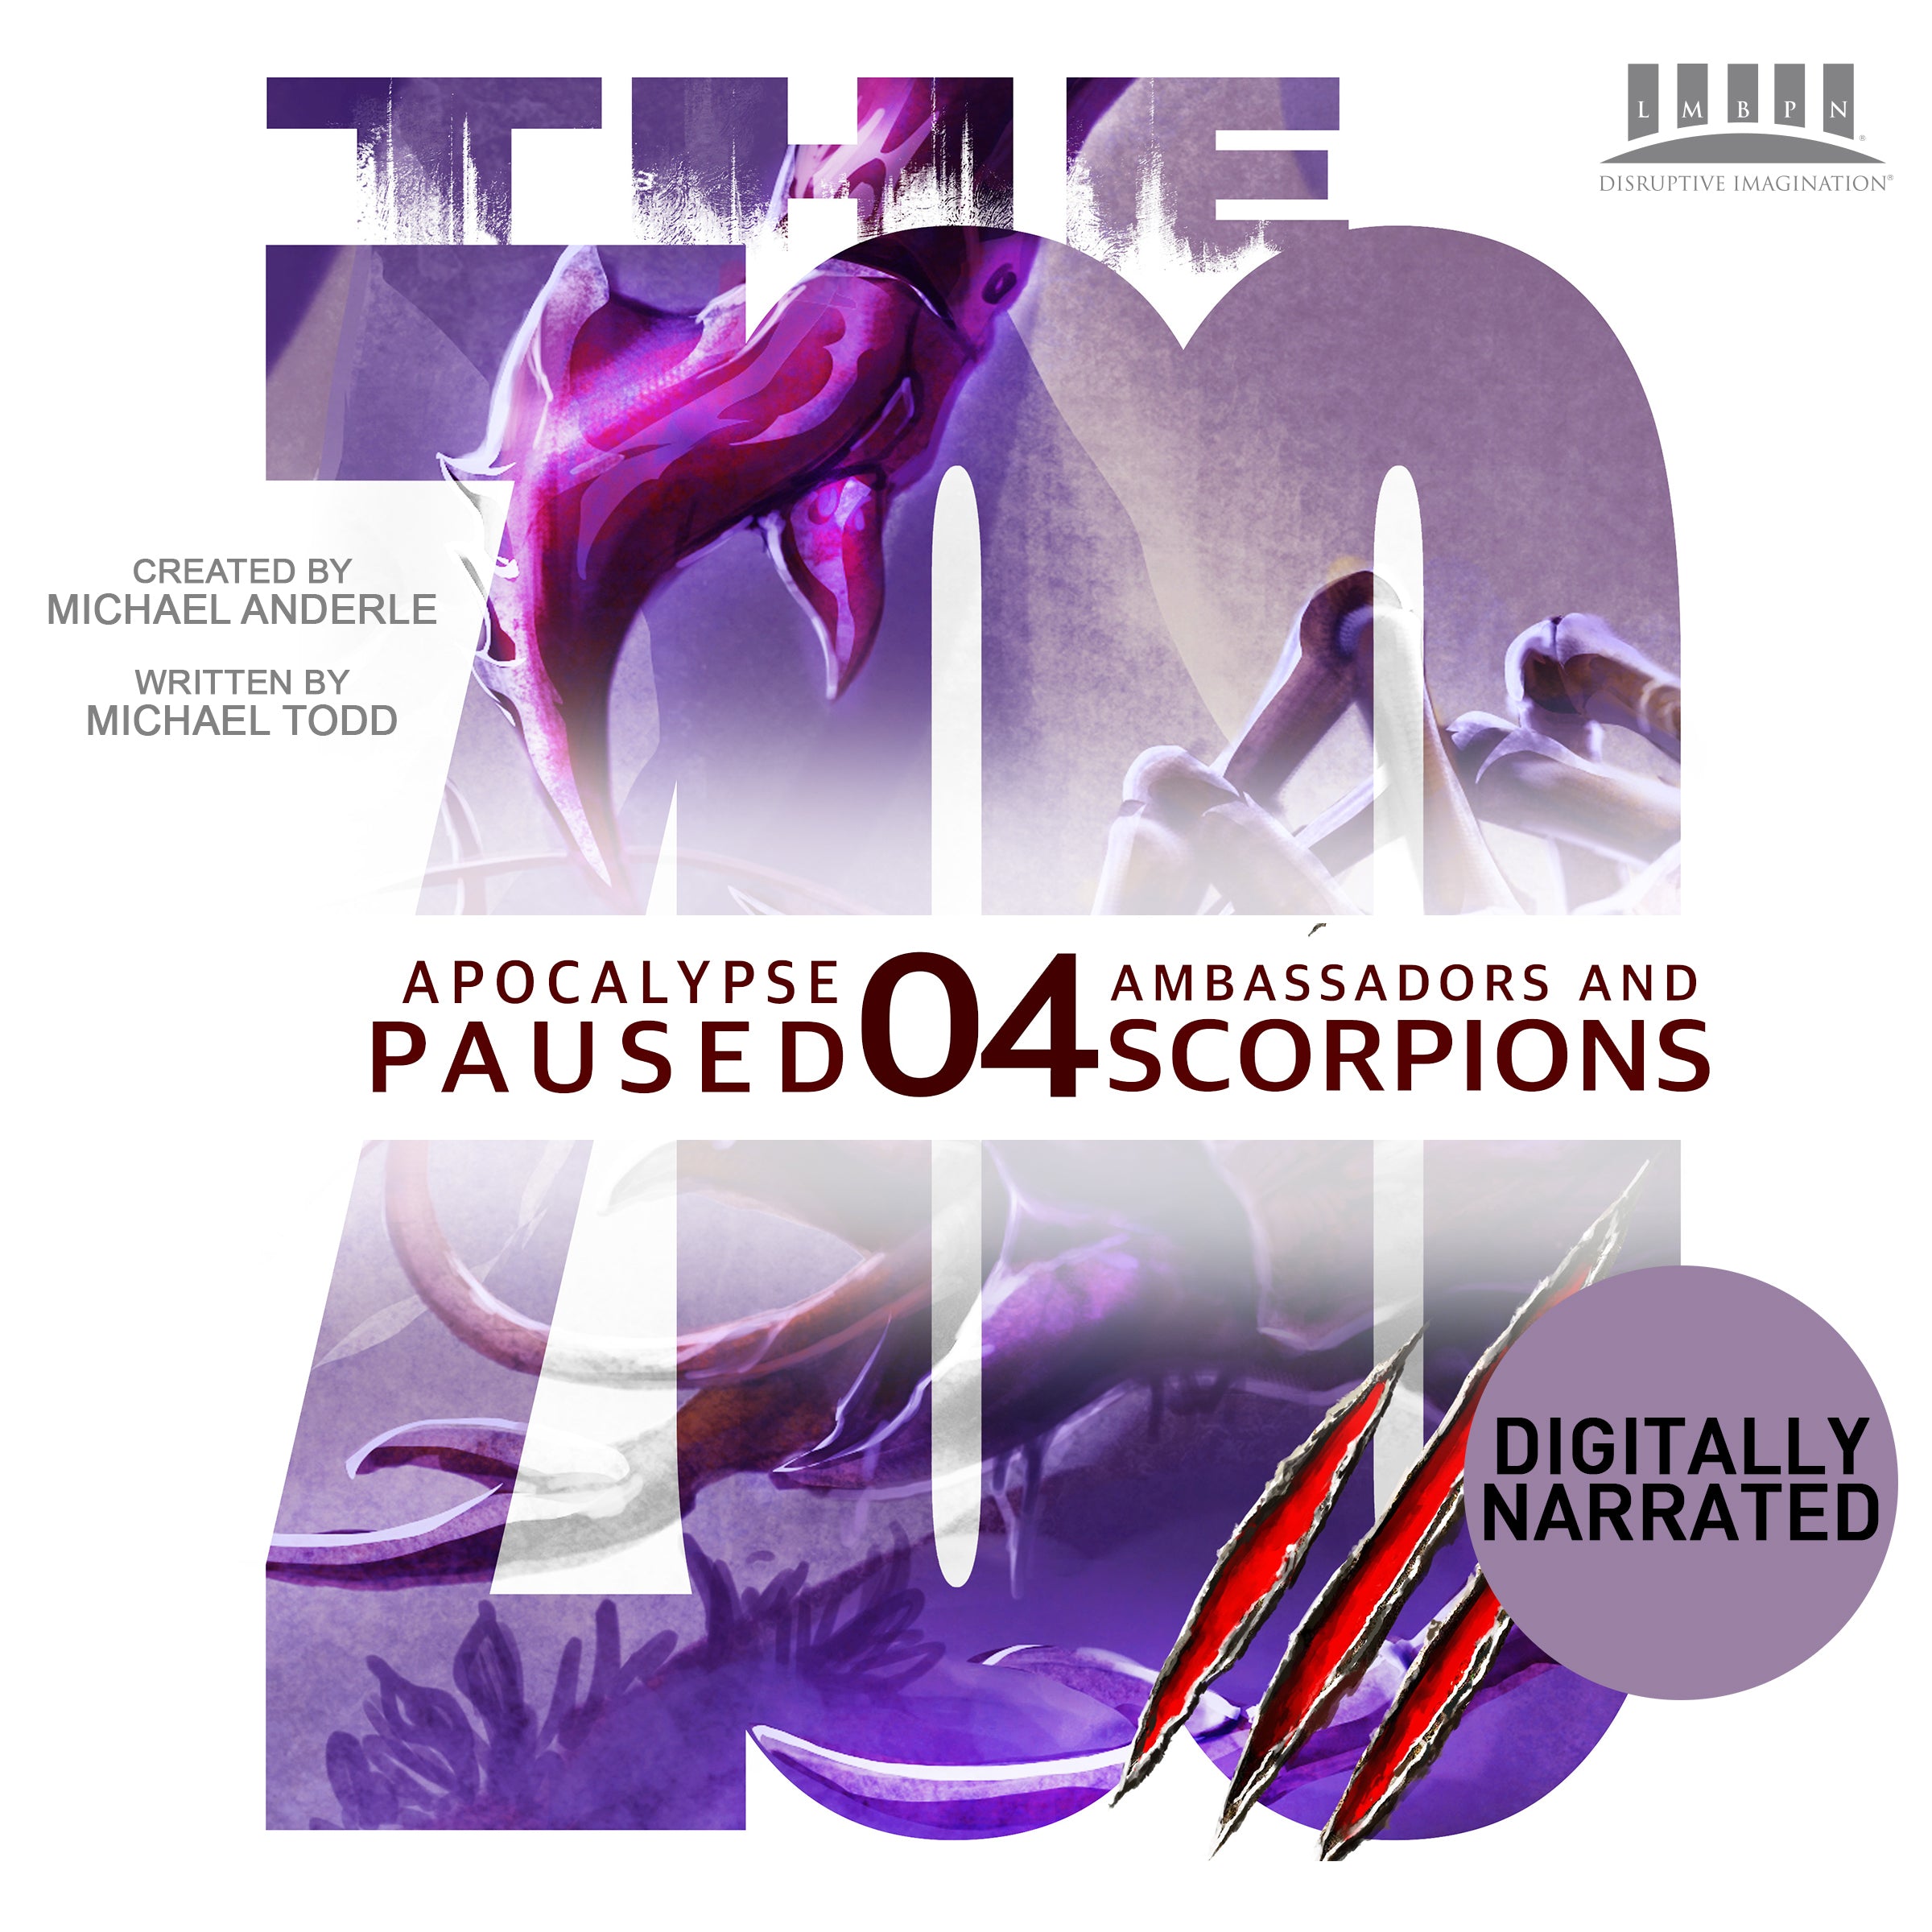 Book 4: Ambassadors and Scorpions Audiobook